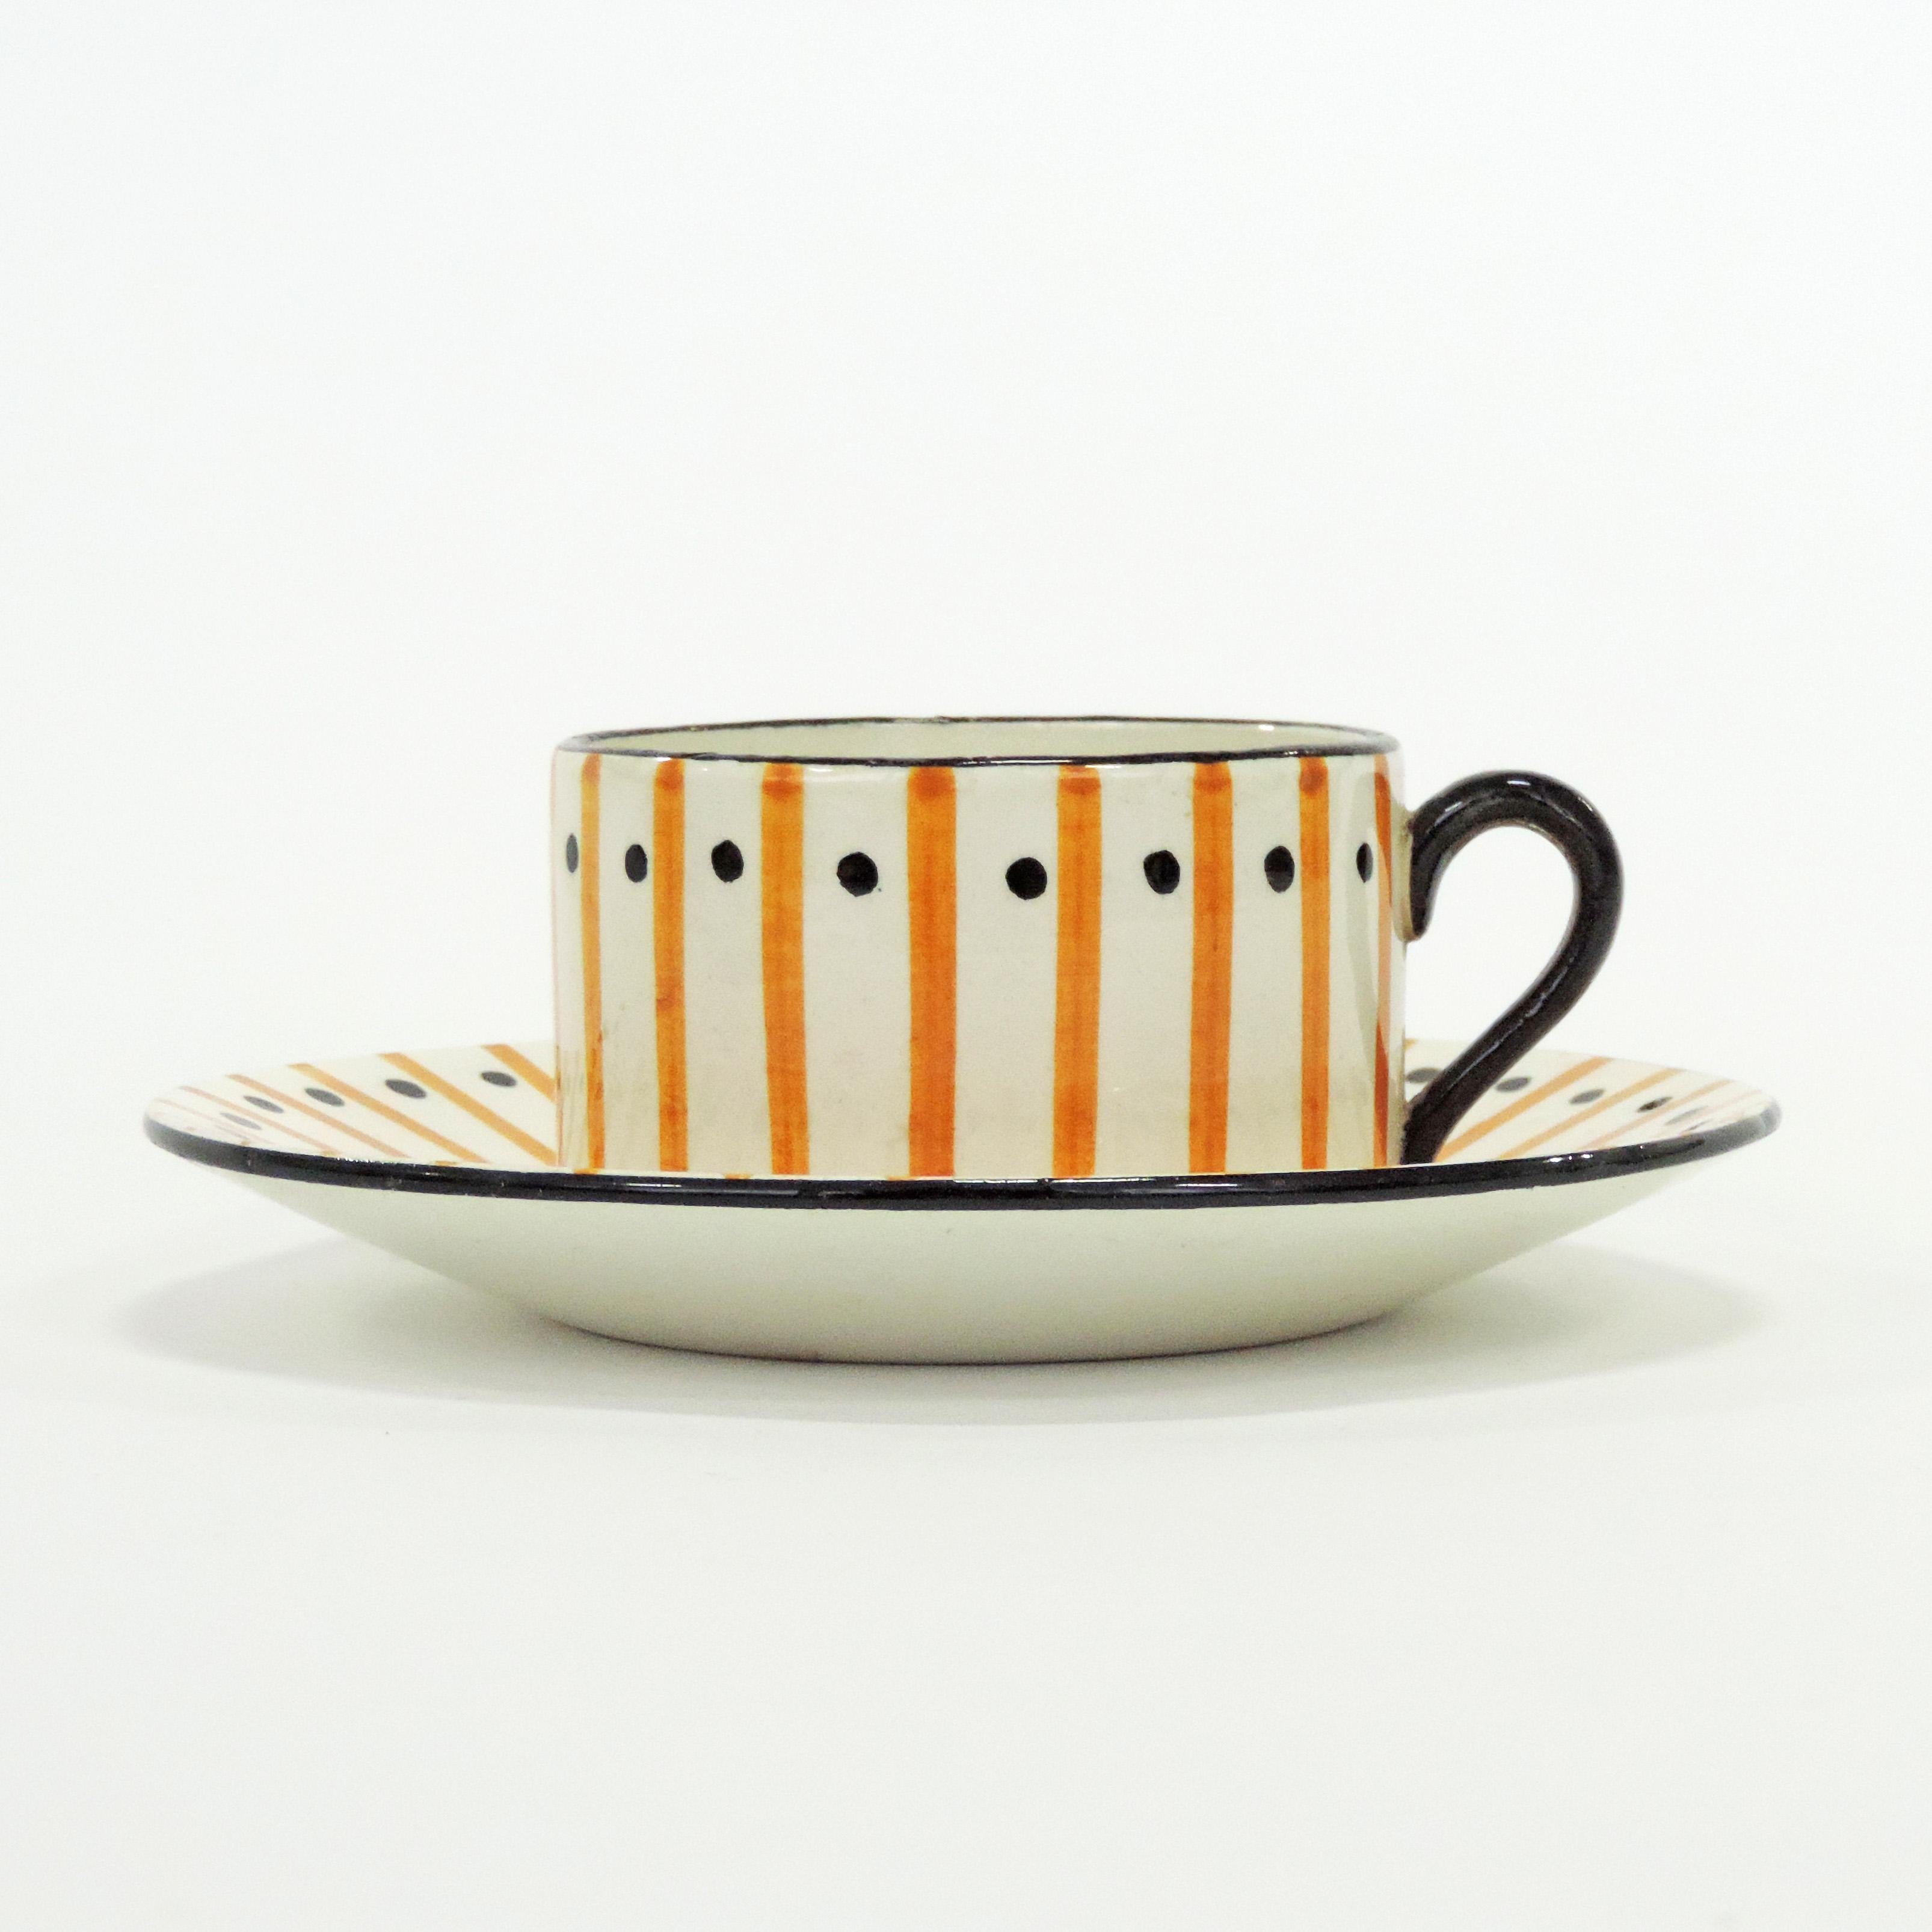 Pair of Art Deco Atelier Primavera tea set, France, 1930s
Plate measurements diameter 16 x height 2cm.